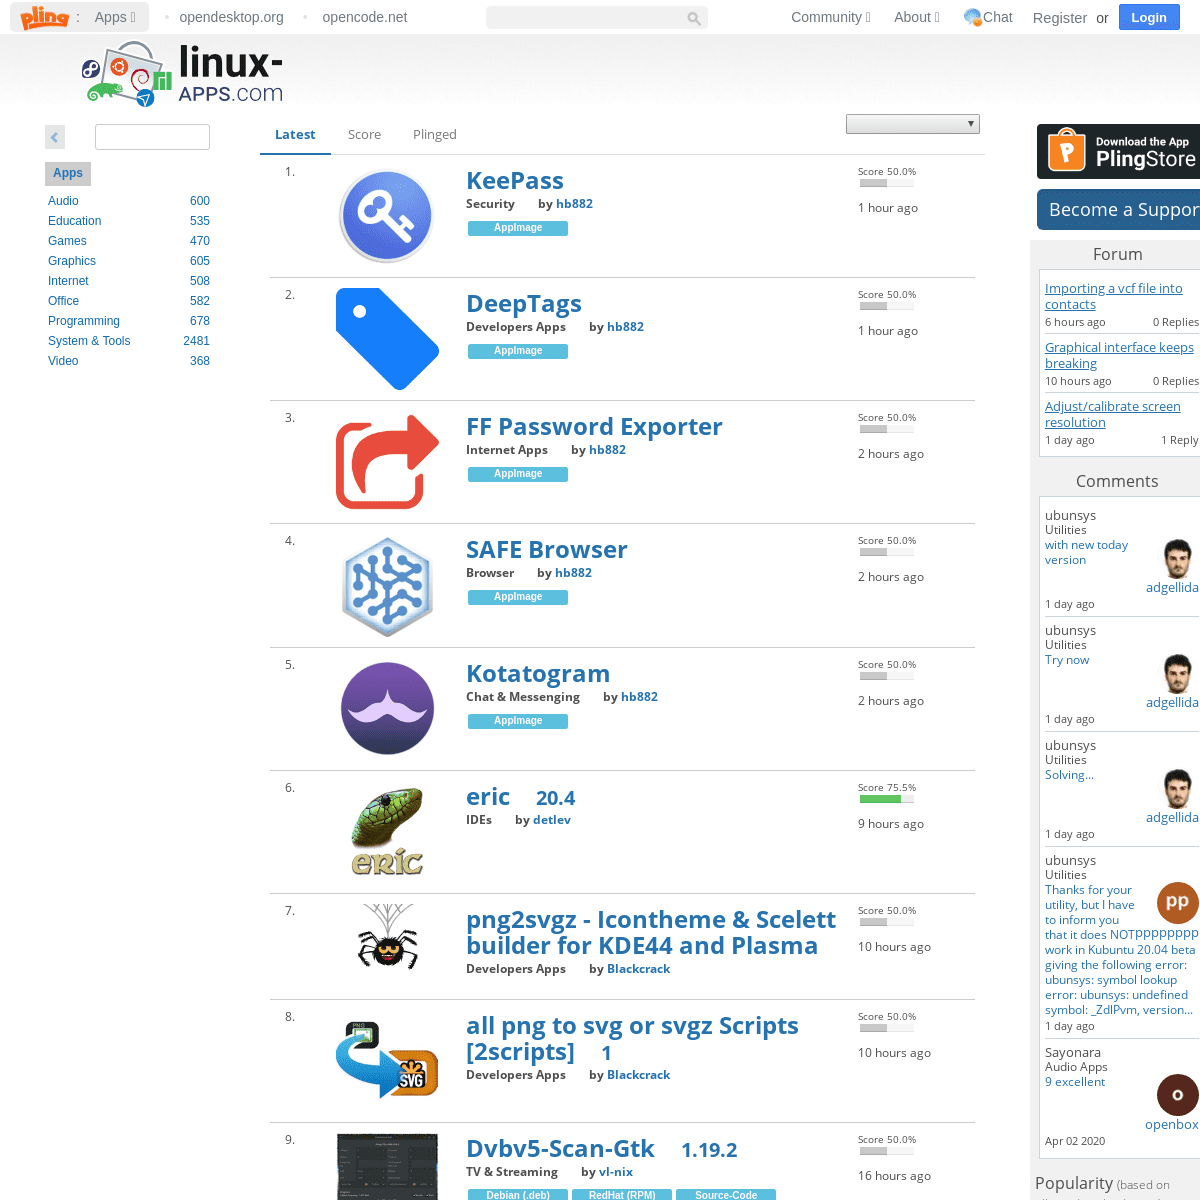 A complete backup of linux-apps.com